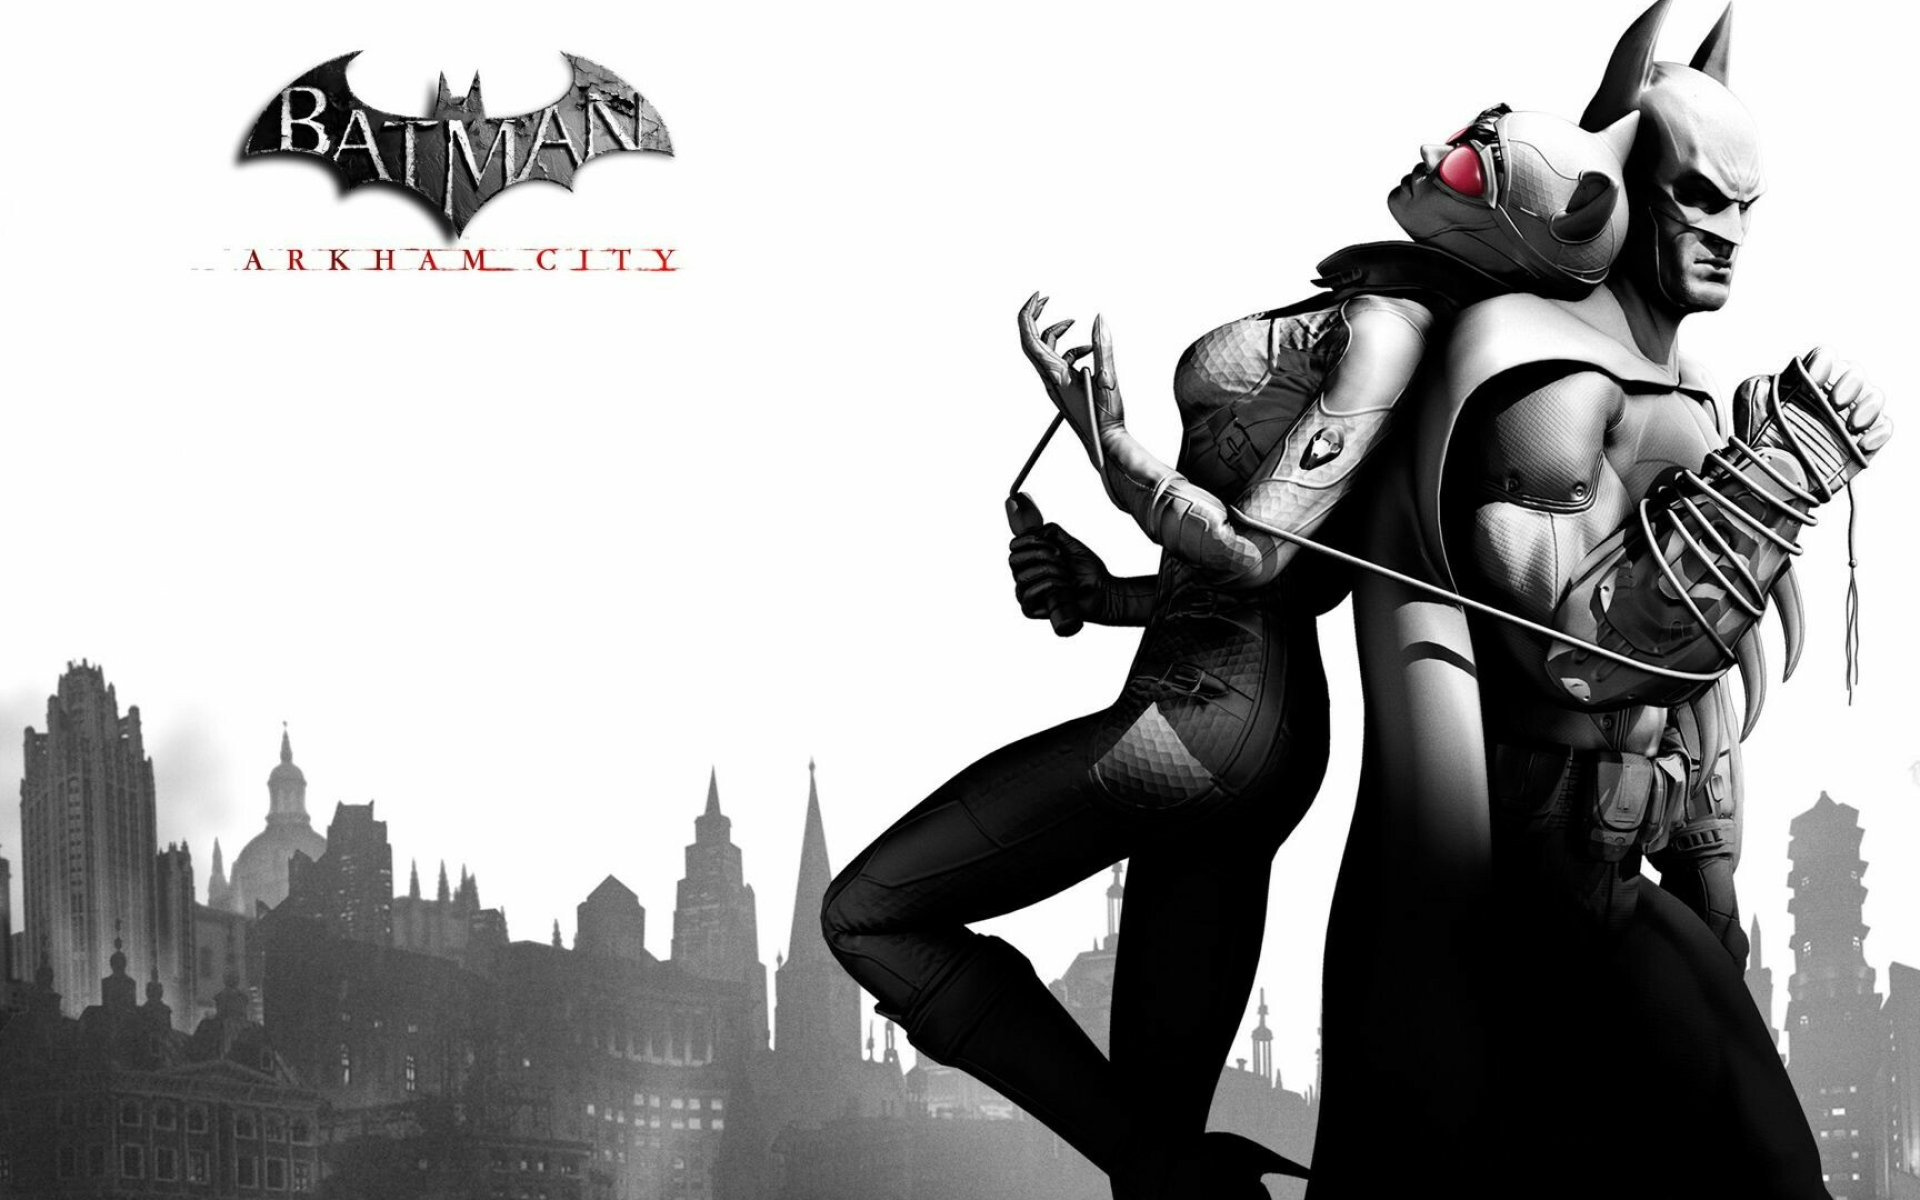 Batman: Arkham City: Selina Kyle and Bruce Wayne, Playable characters. 1920x1200 HD Wallpaper.